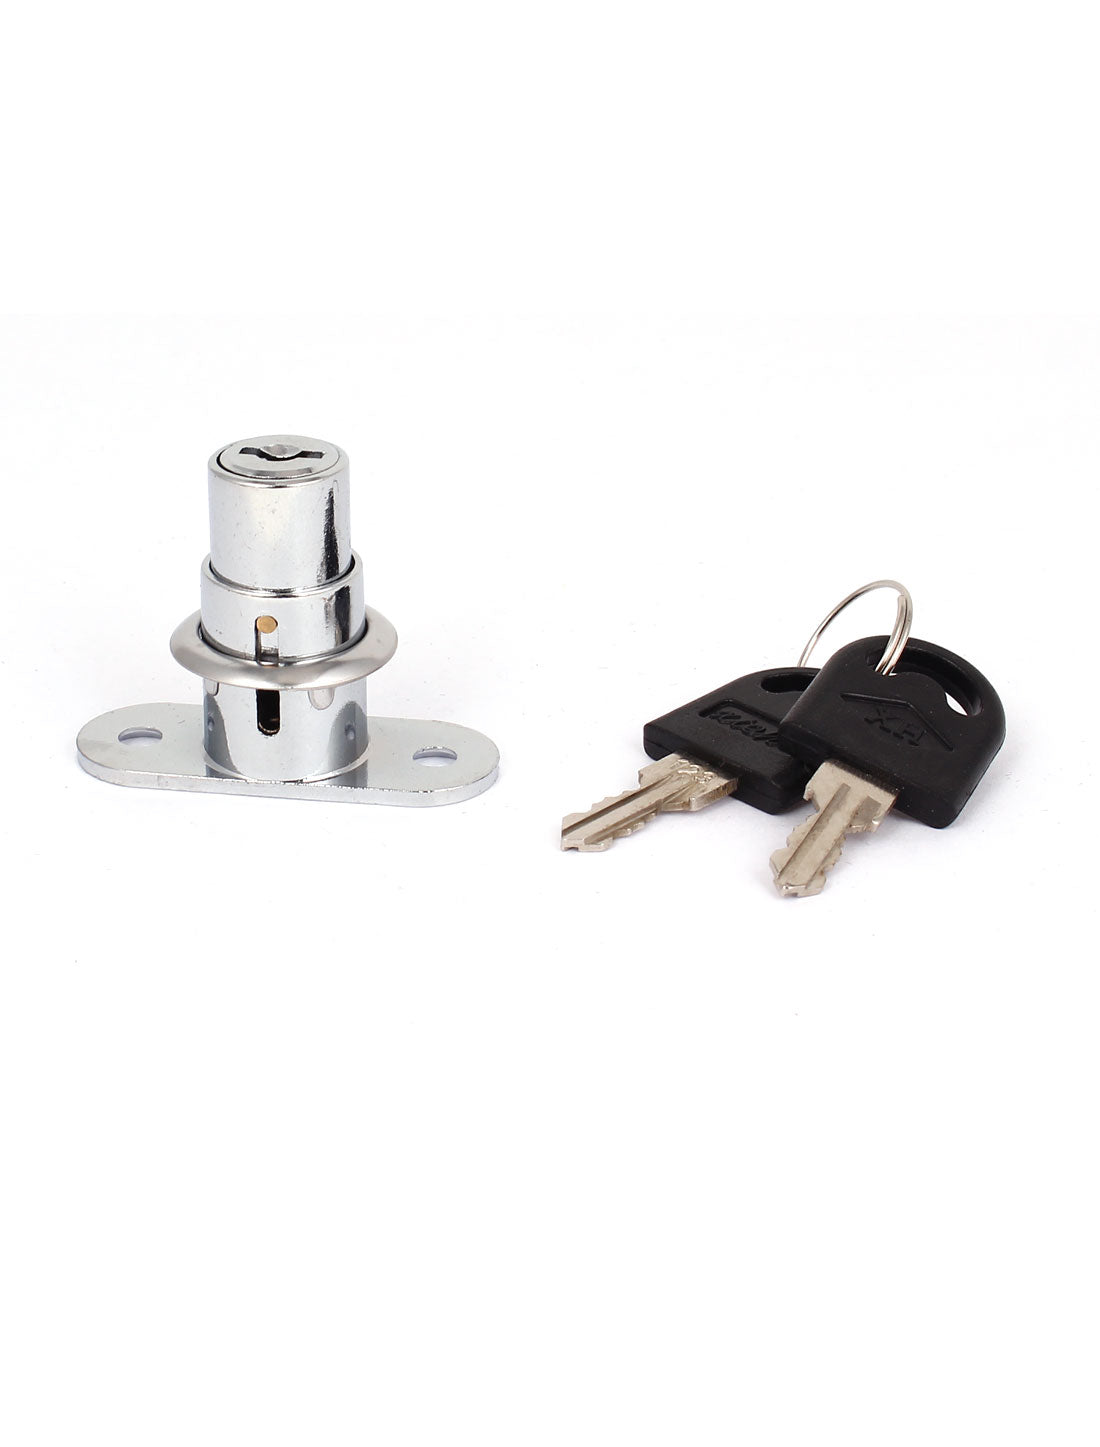 uxcell Uxcell 16mm Dia Head Door Showcase Metal Cylinder Plunger Lock Lockset w 2 Keys